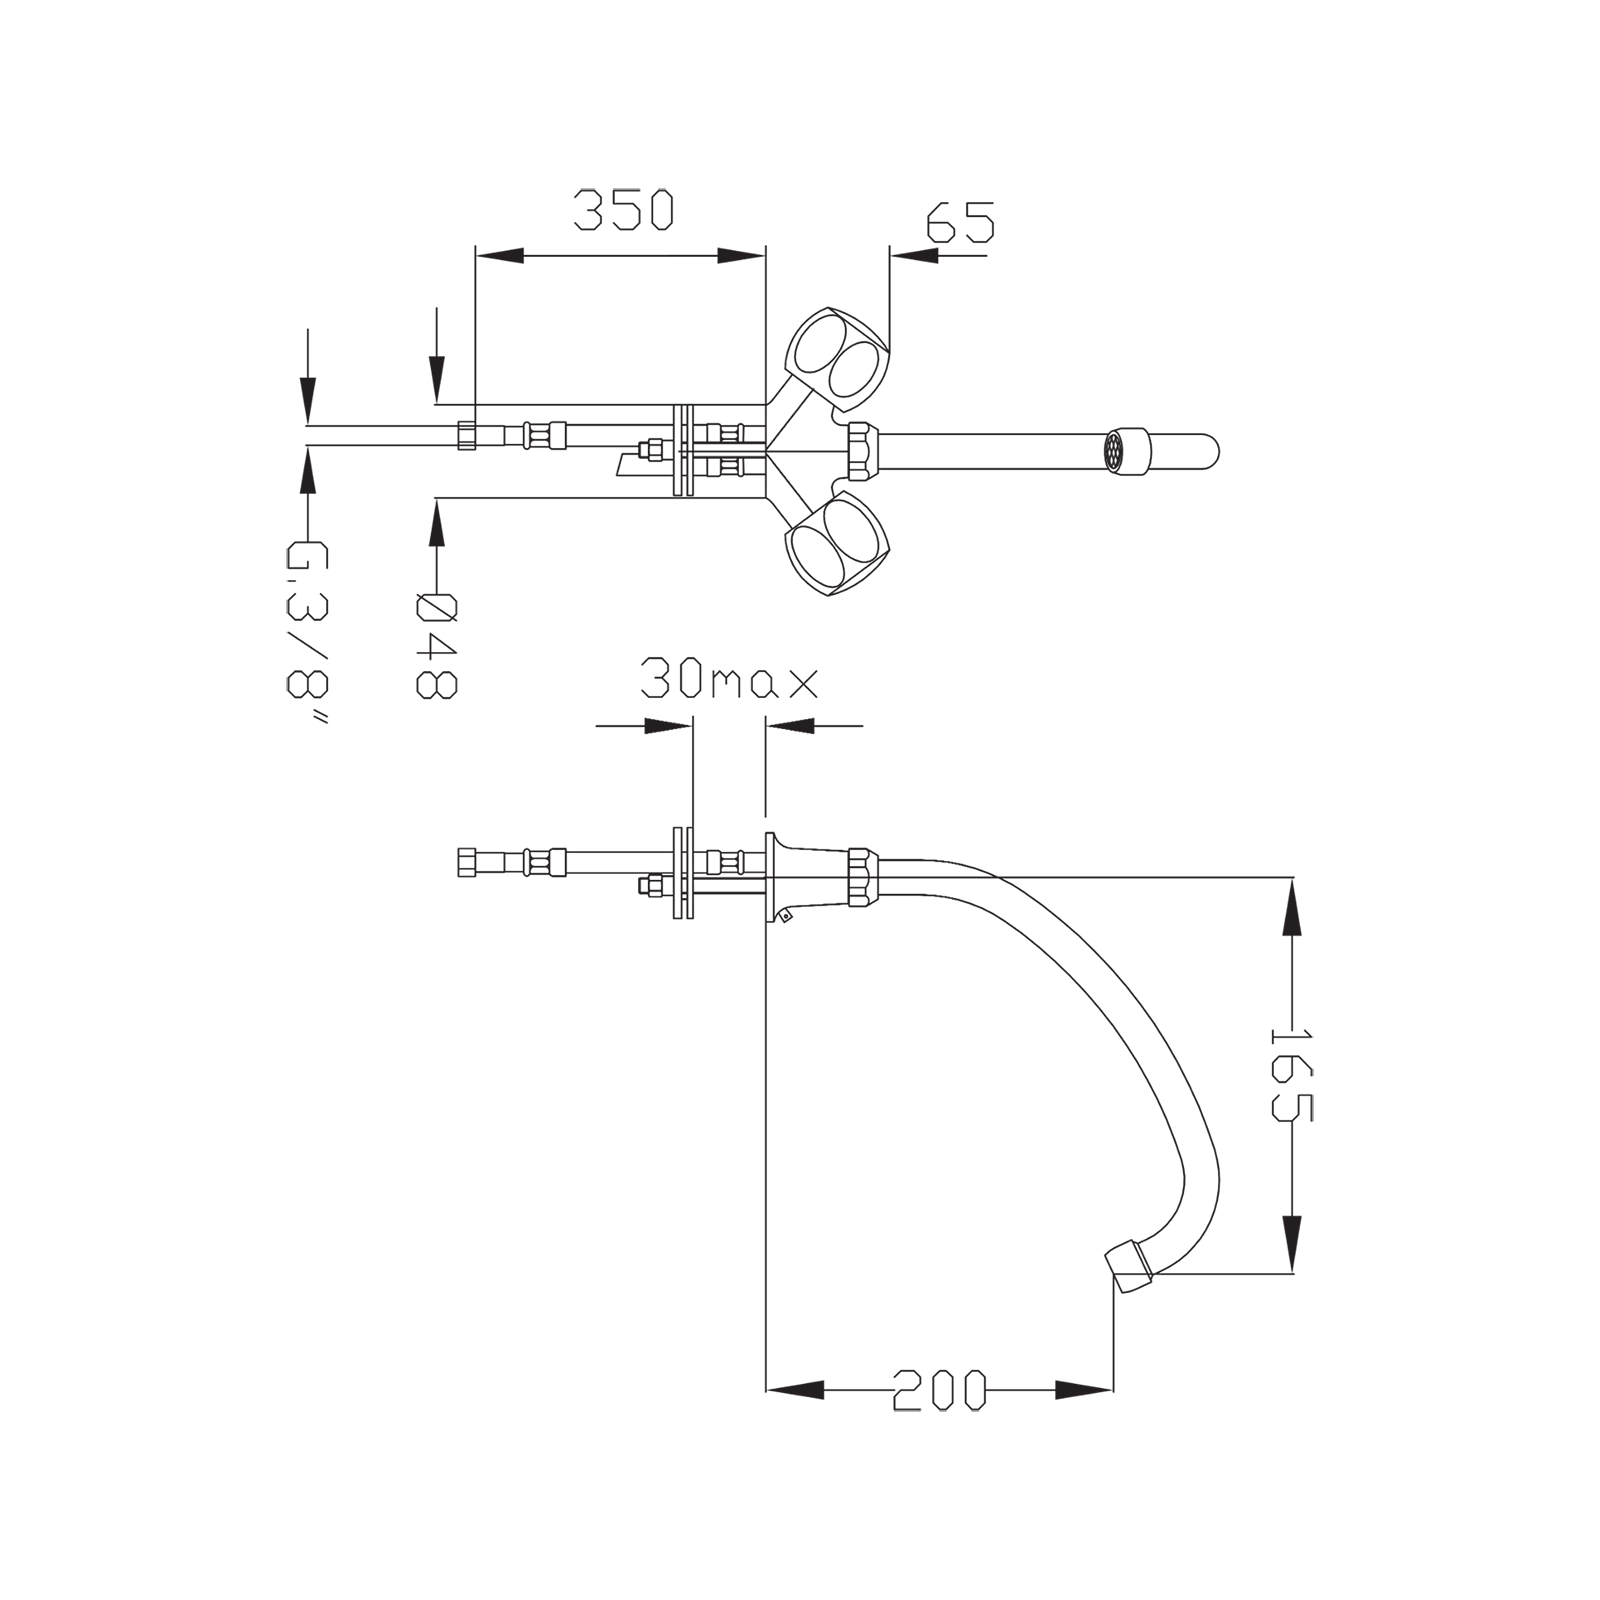 Single-hole sink unit with swivel J-spout